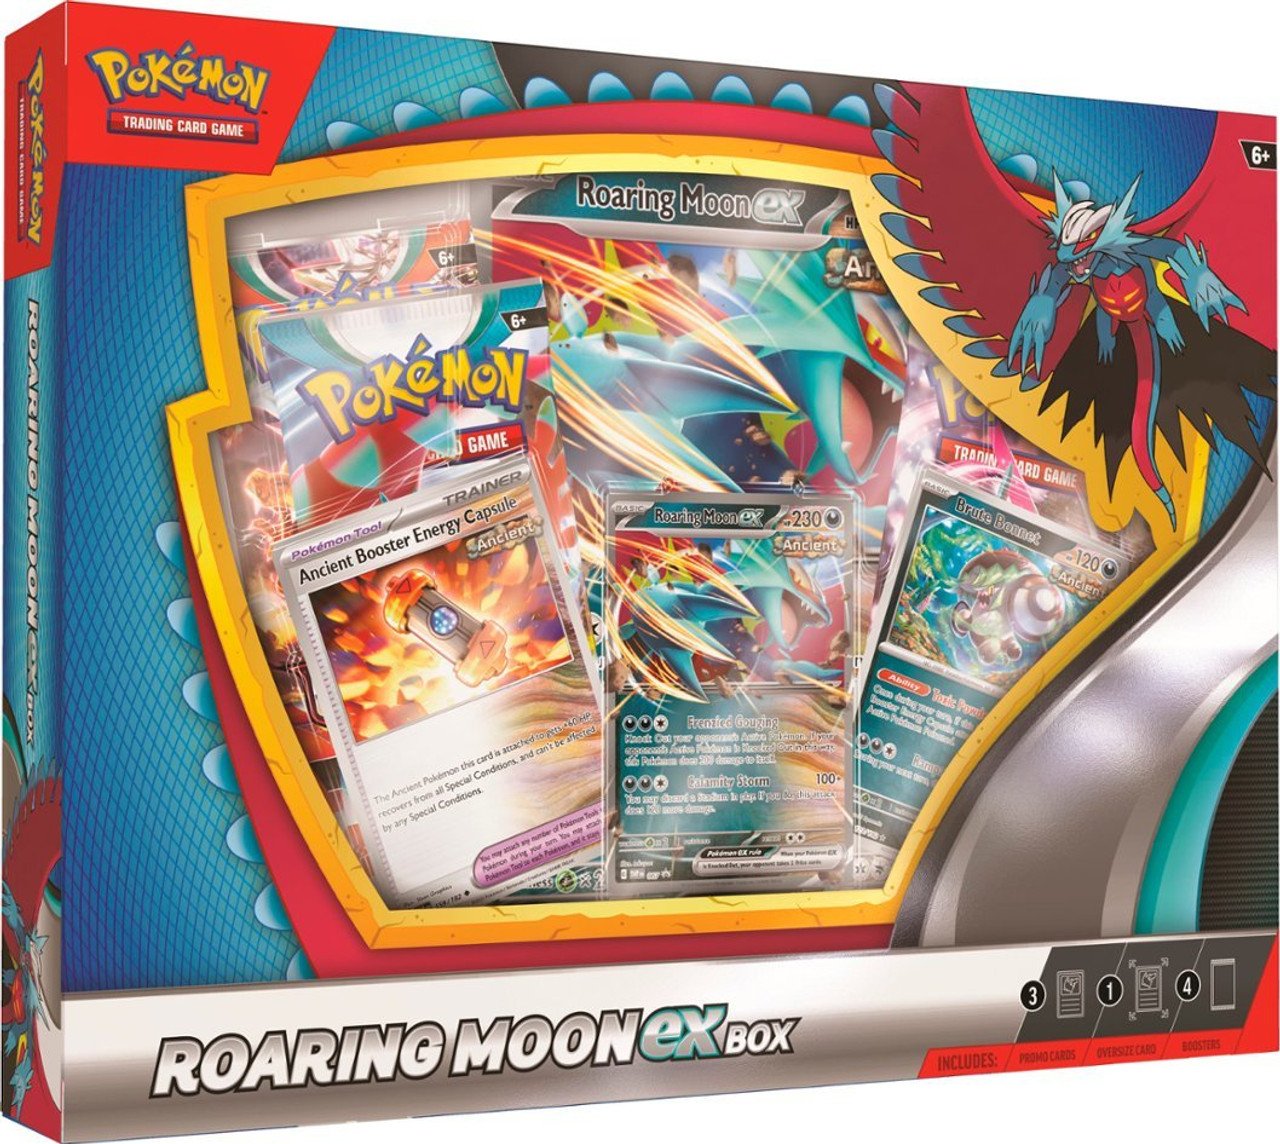 Pokemon - Roaring Moon ex Box or Iron Valiant ex Box (One at Random) Card Game - Roaring Moon